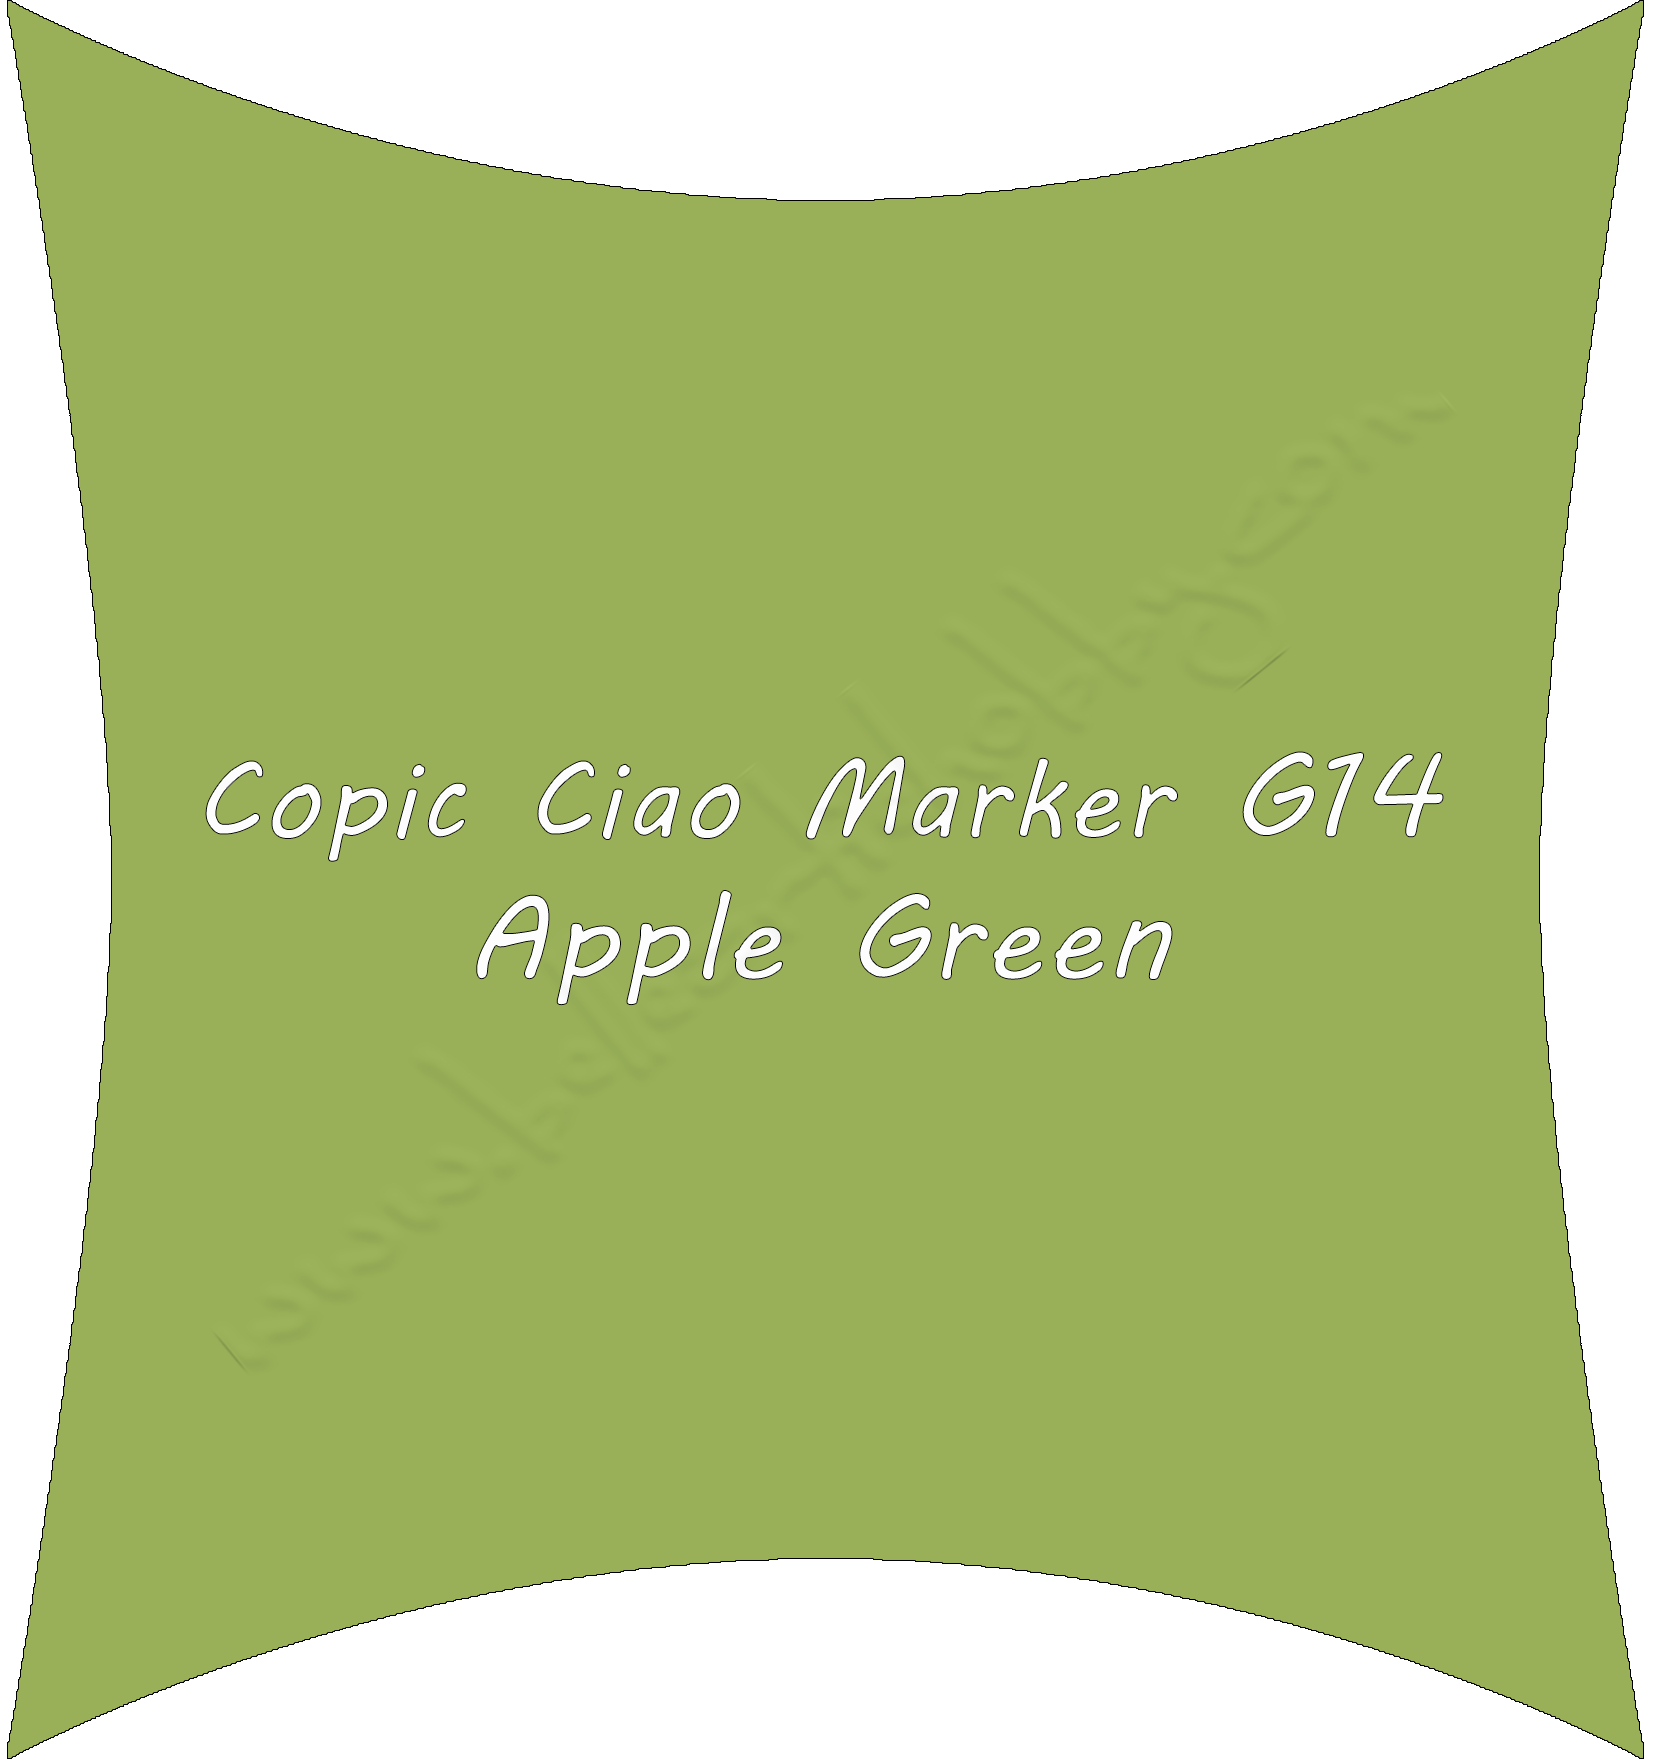 G14 Apple Green